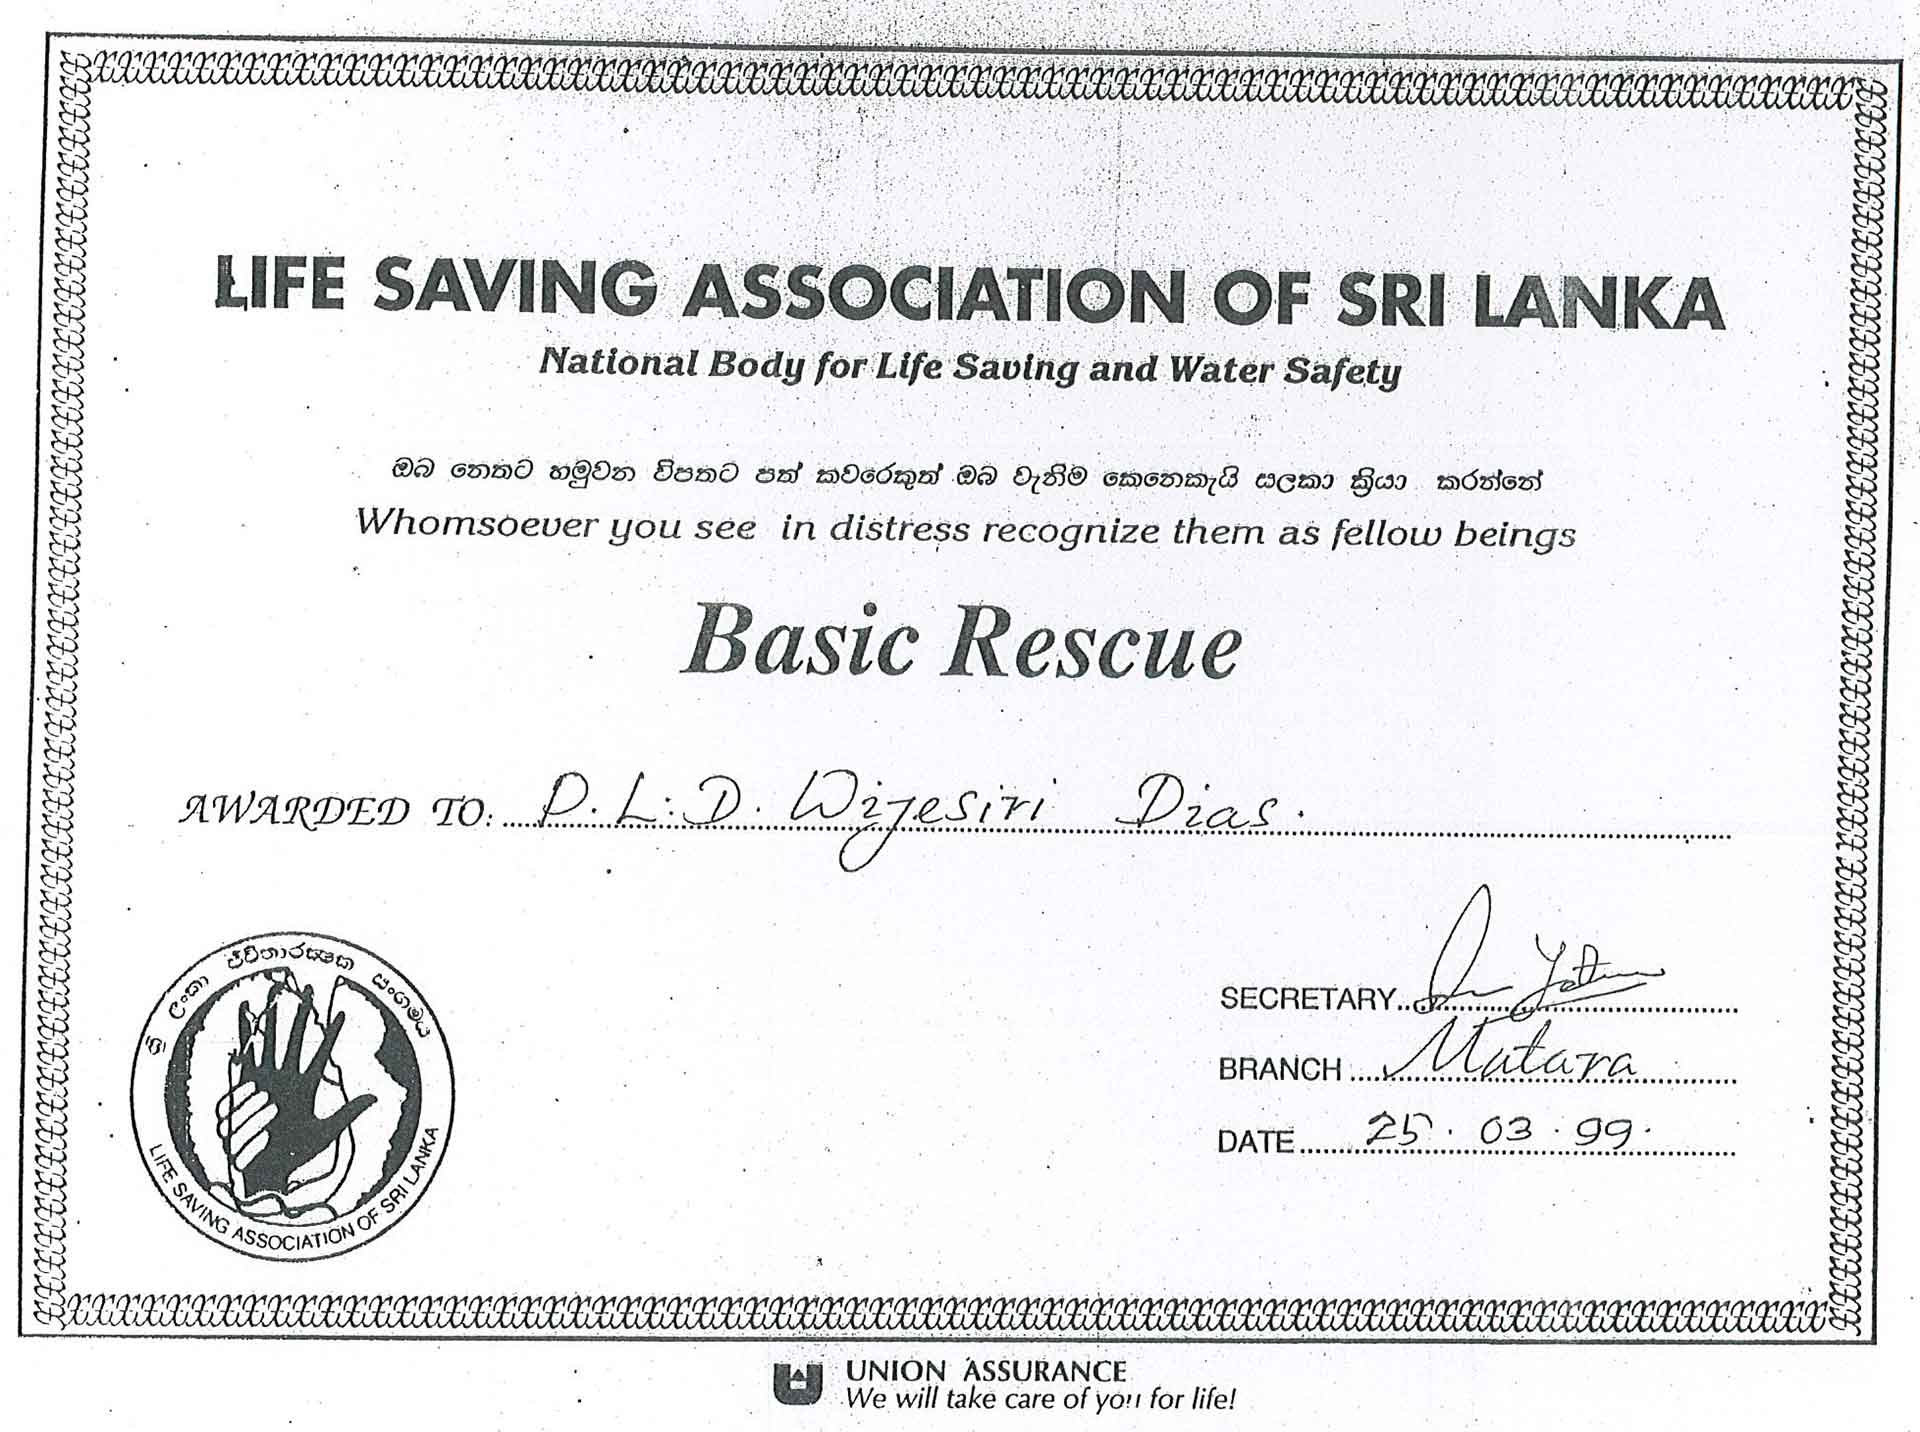 Life Saving Association of Sri Lanka